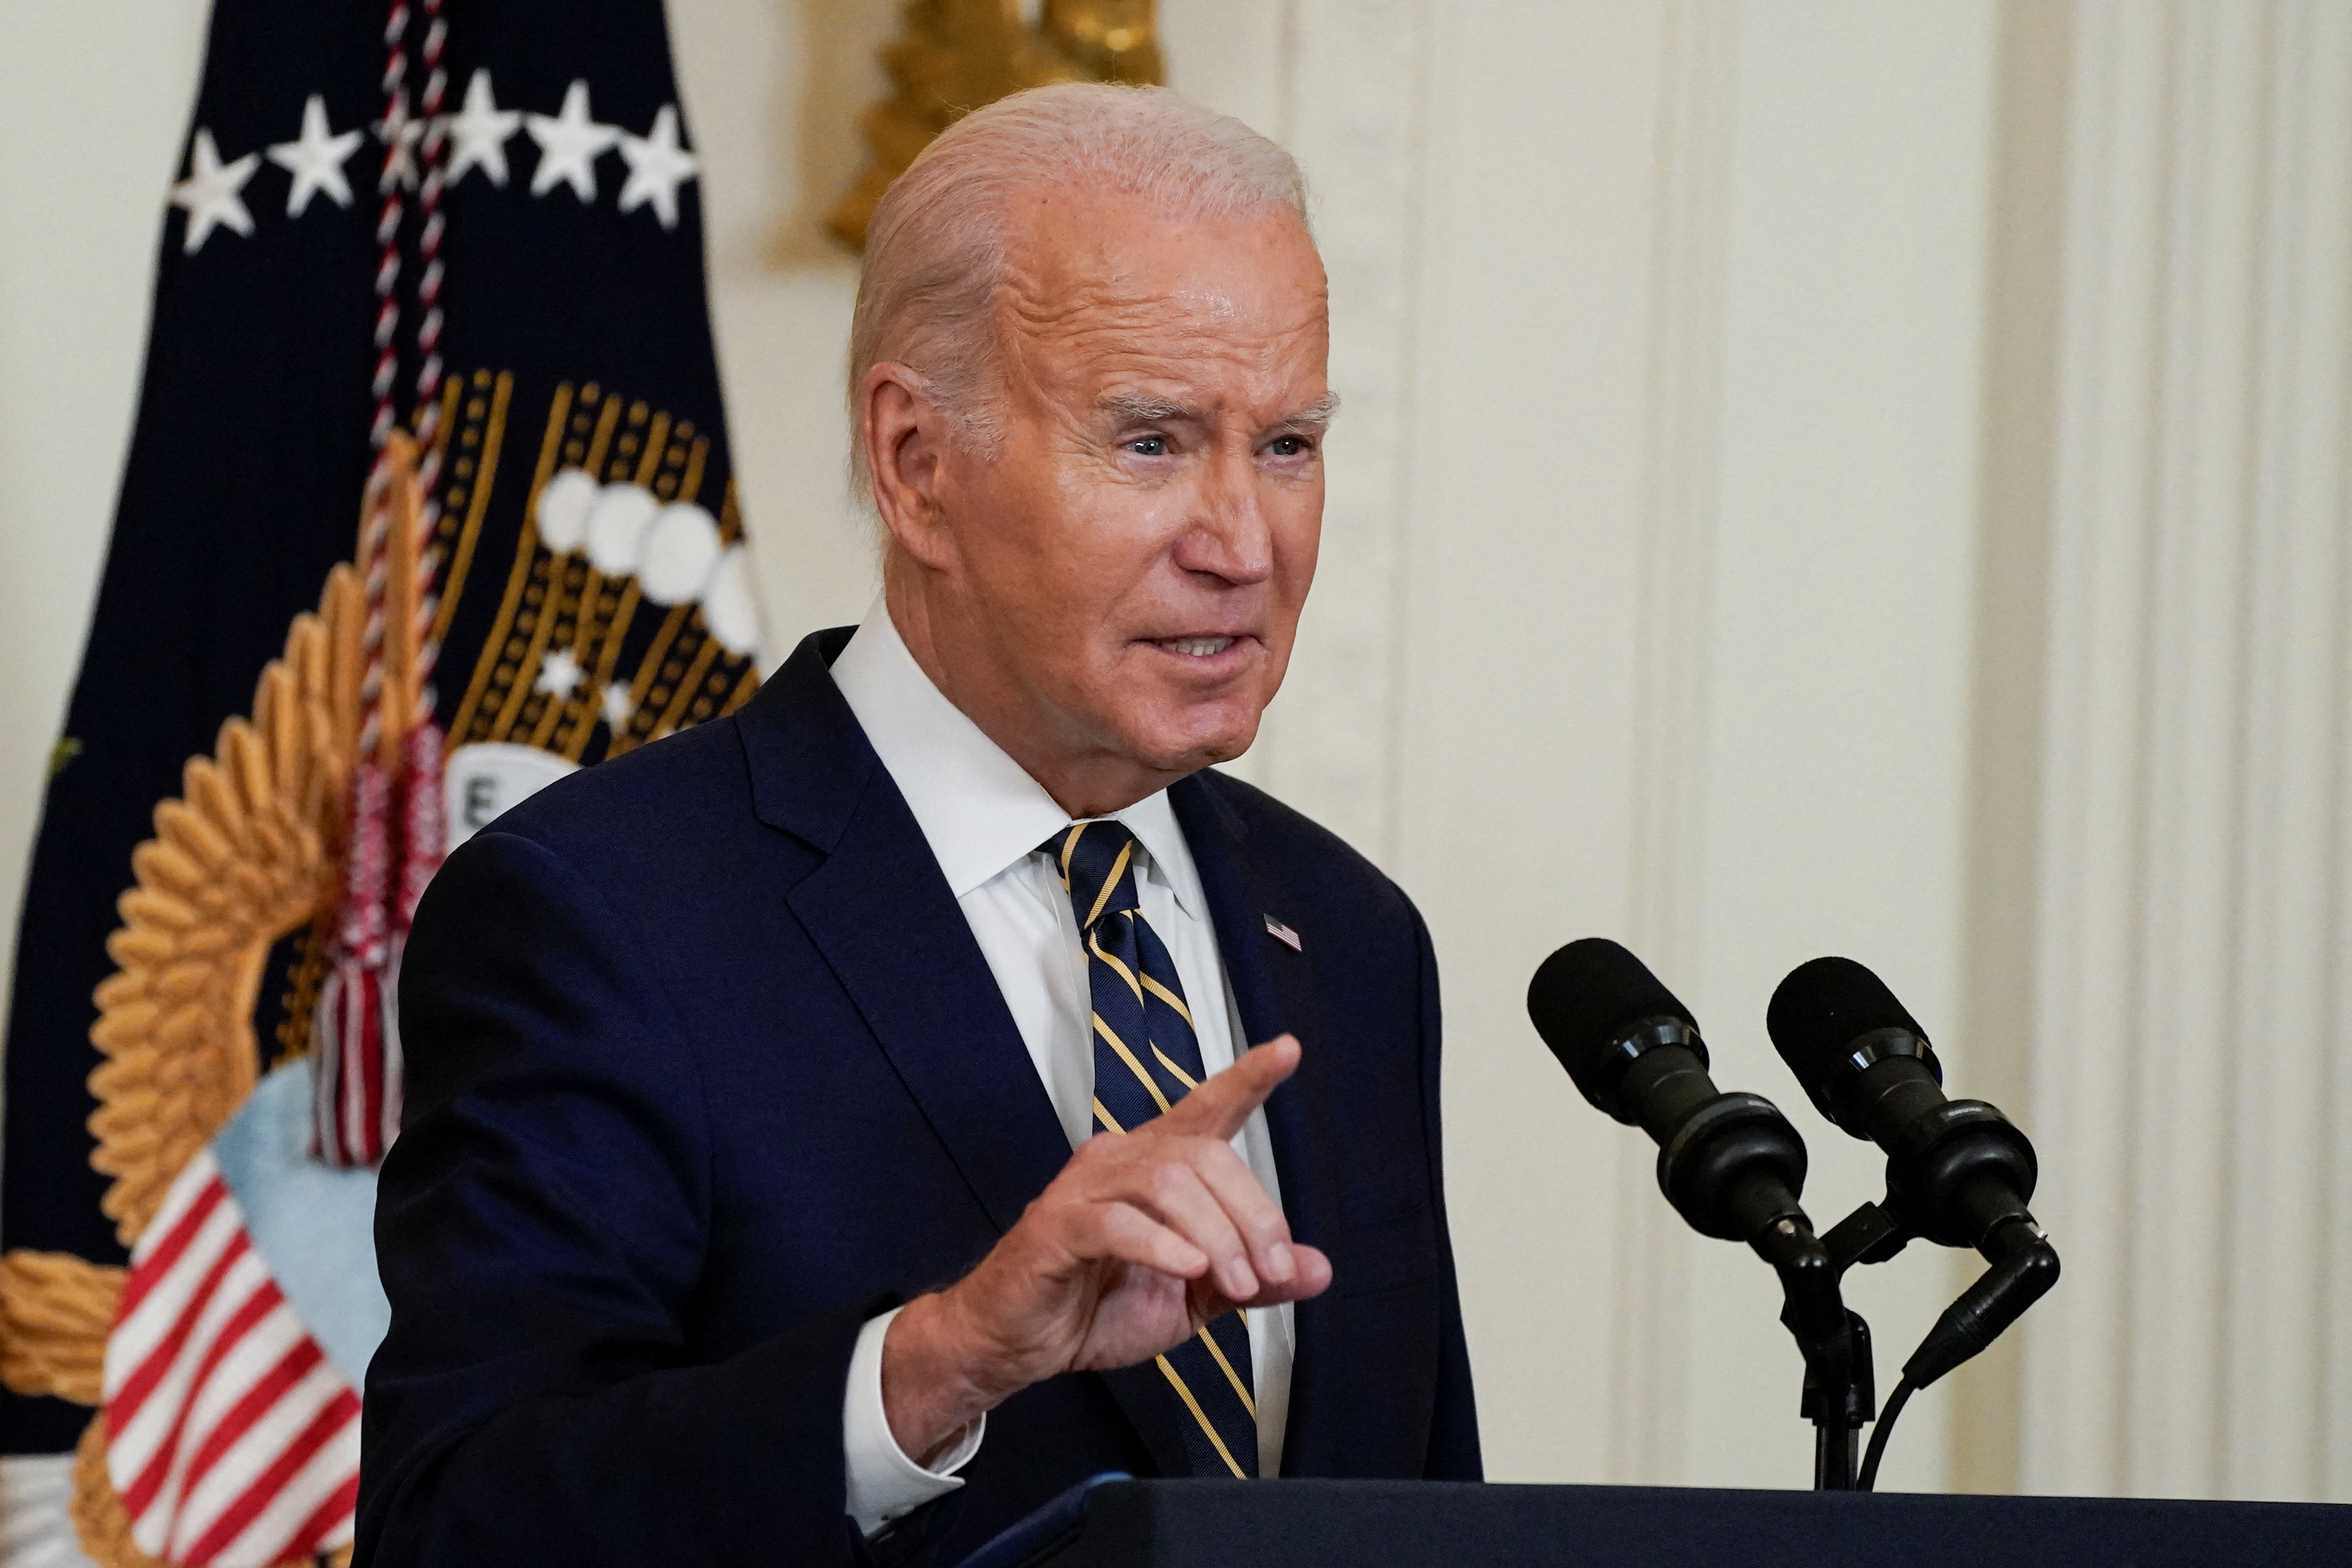 U.S. President Joe Biden delivers remarks on access to mental health care, in Washington